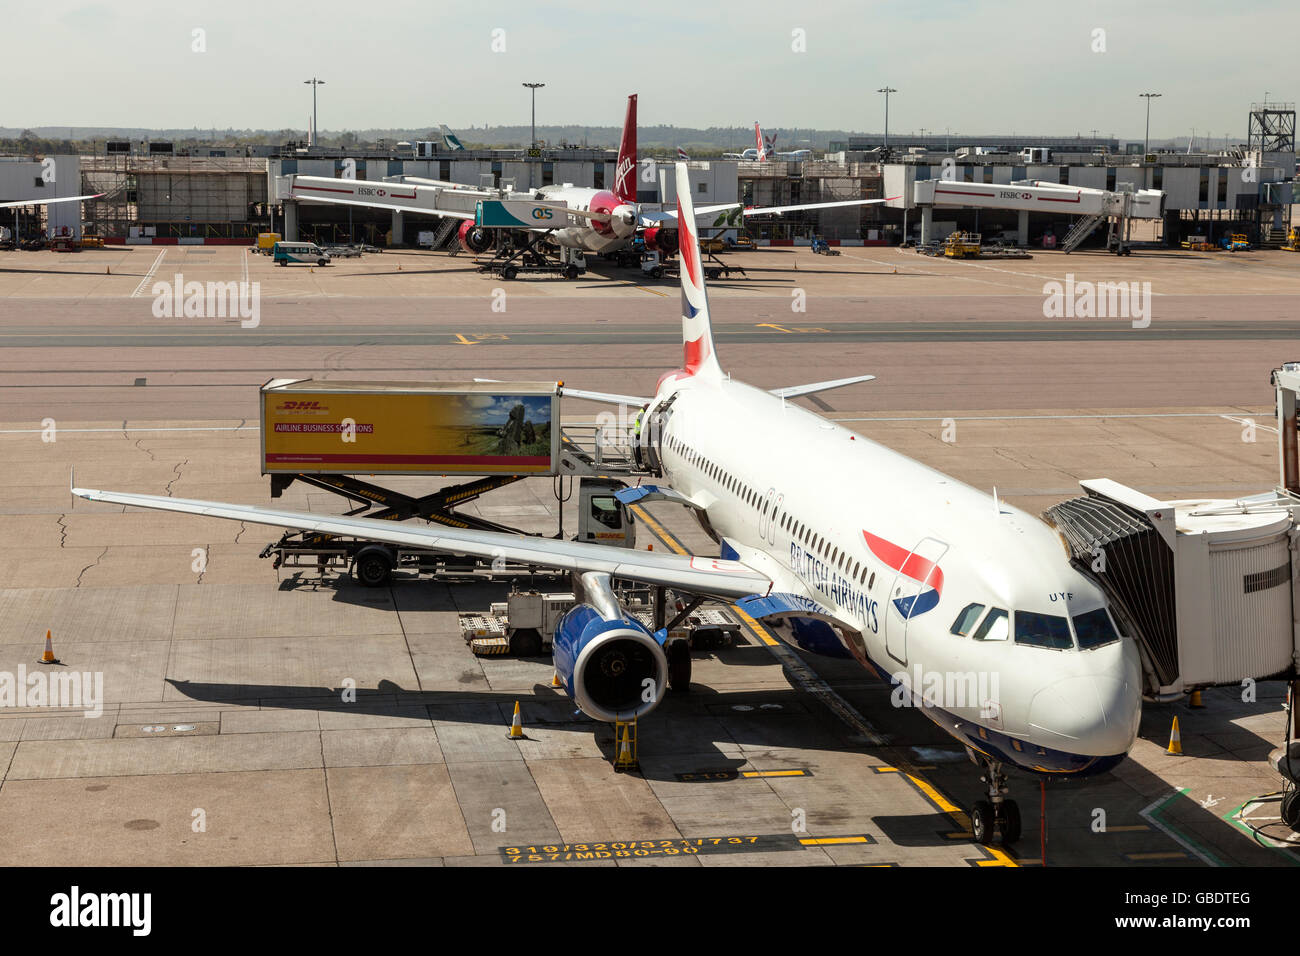 British Airways Airplanes at the London Heathrow Airport Stock Photo